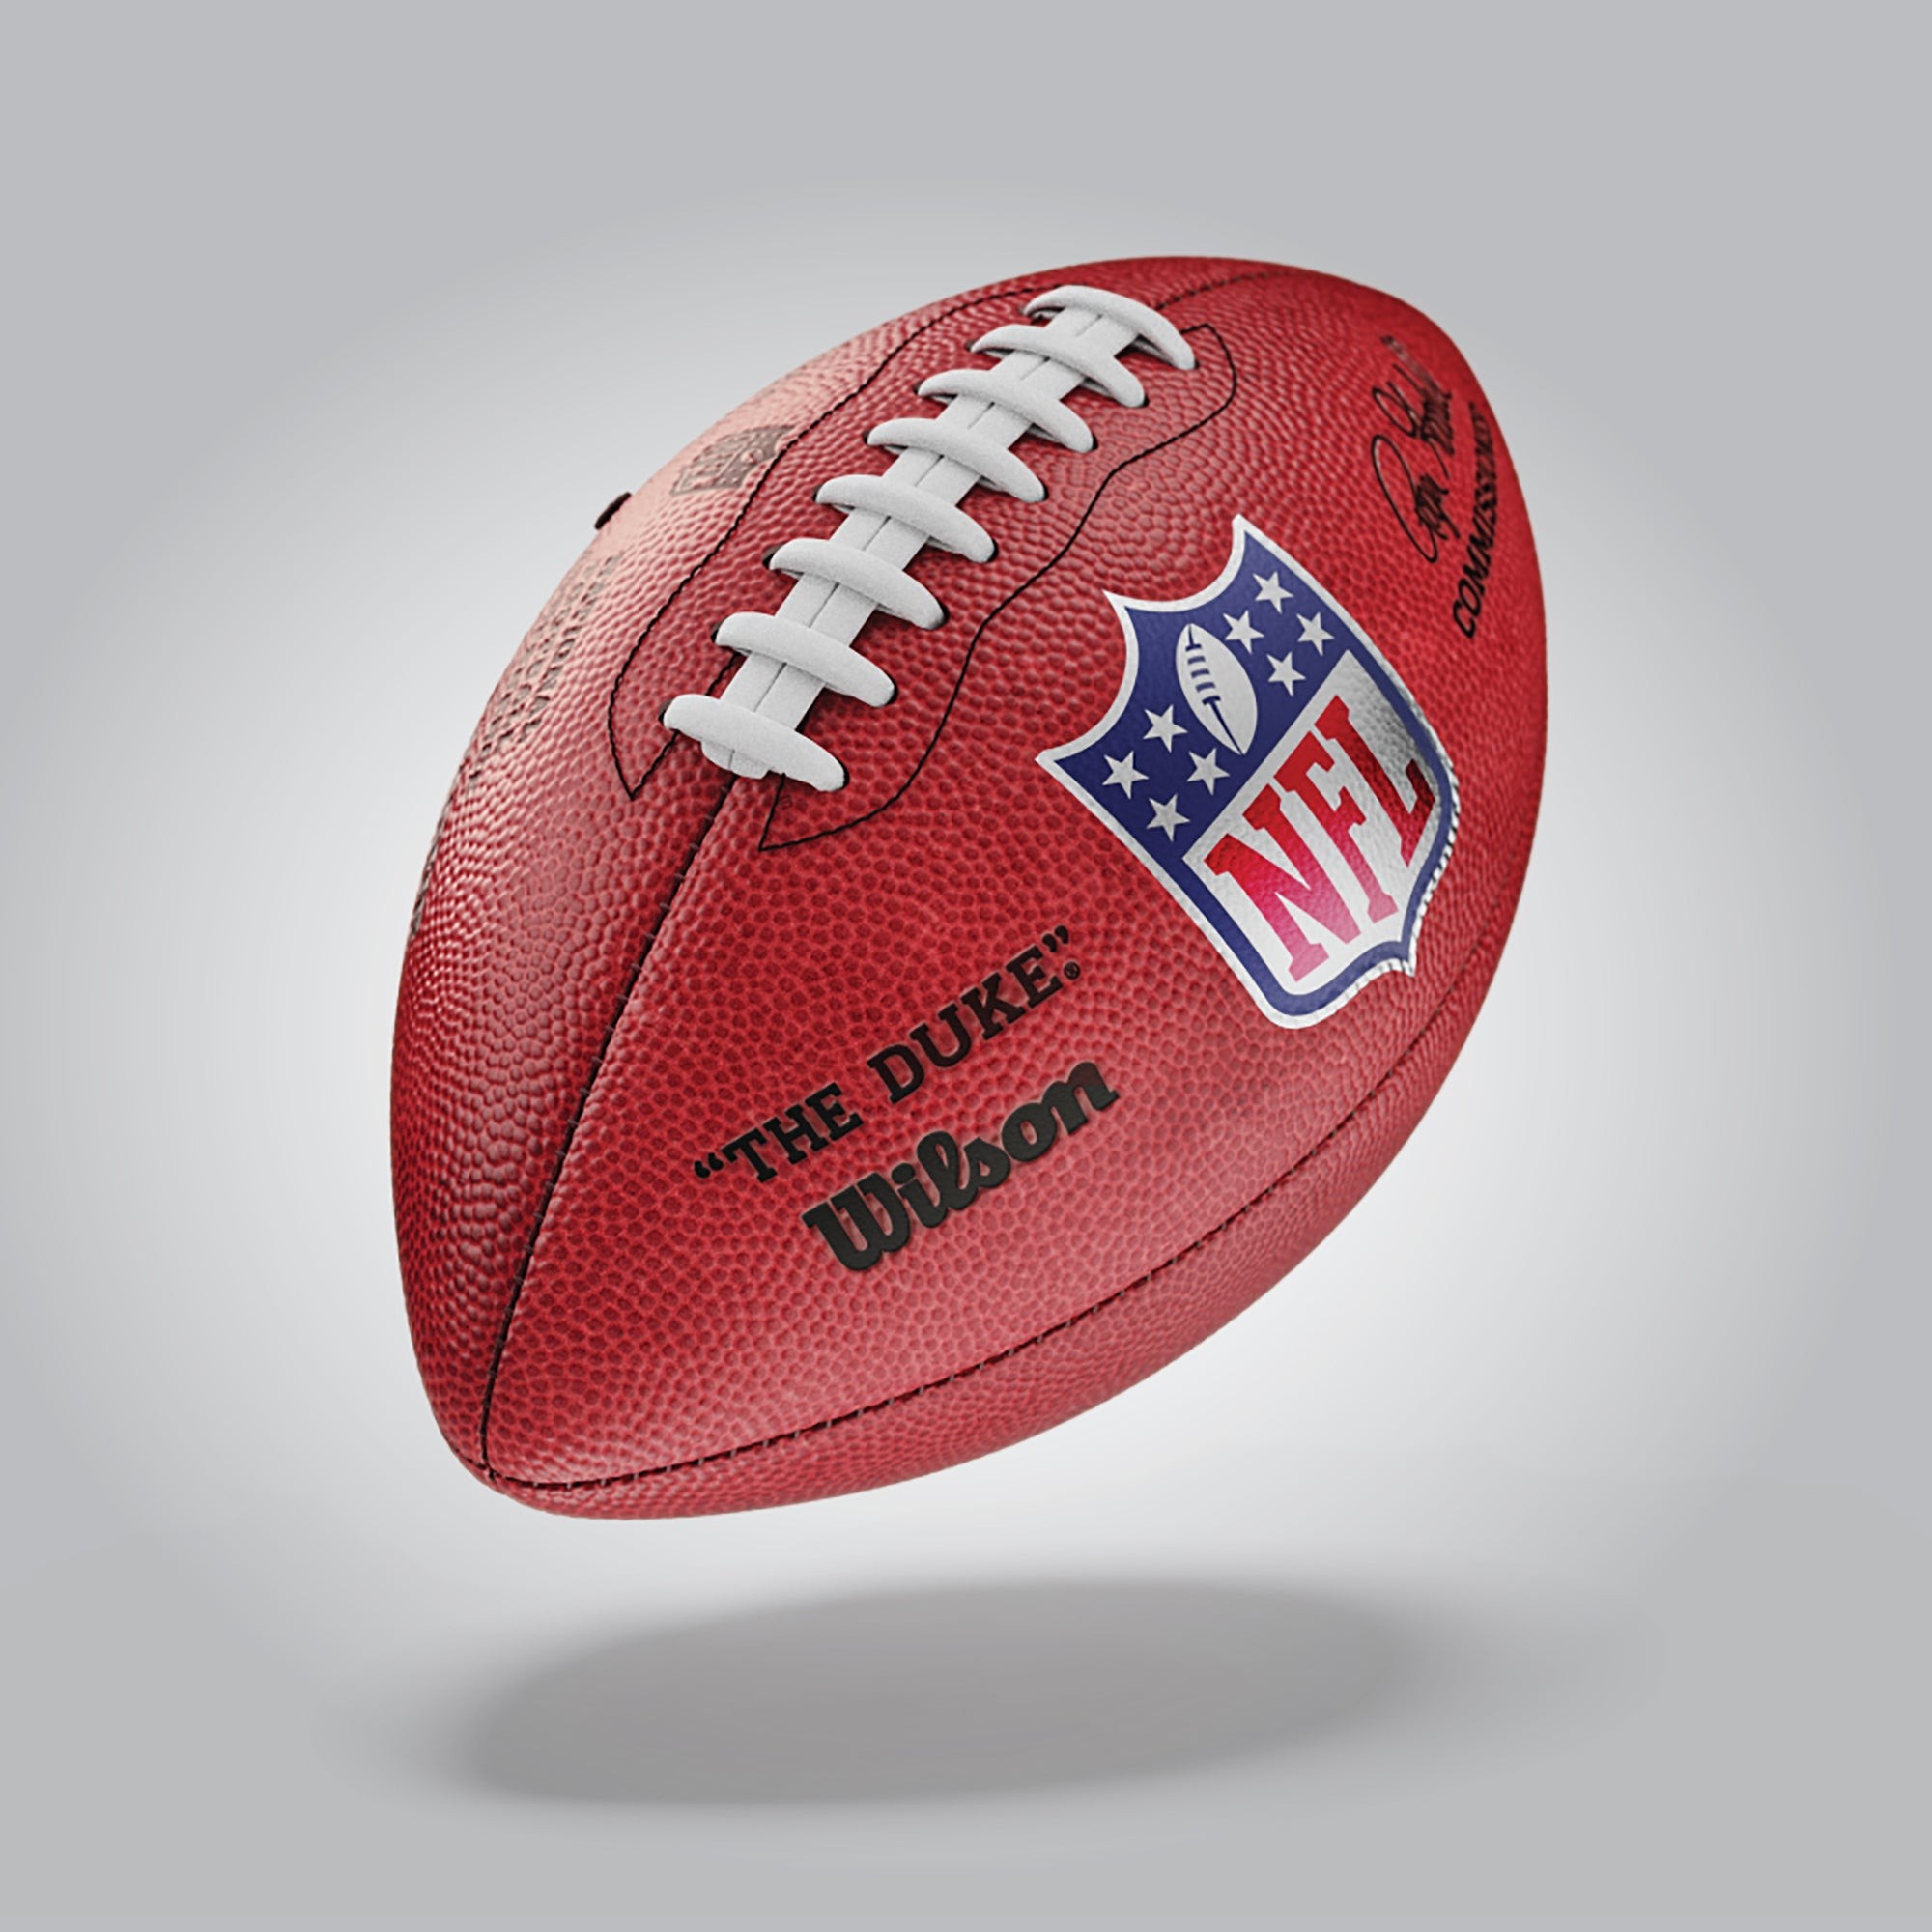 The Duke NFL Leather Game Football